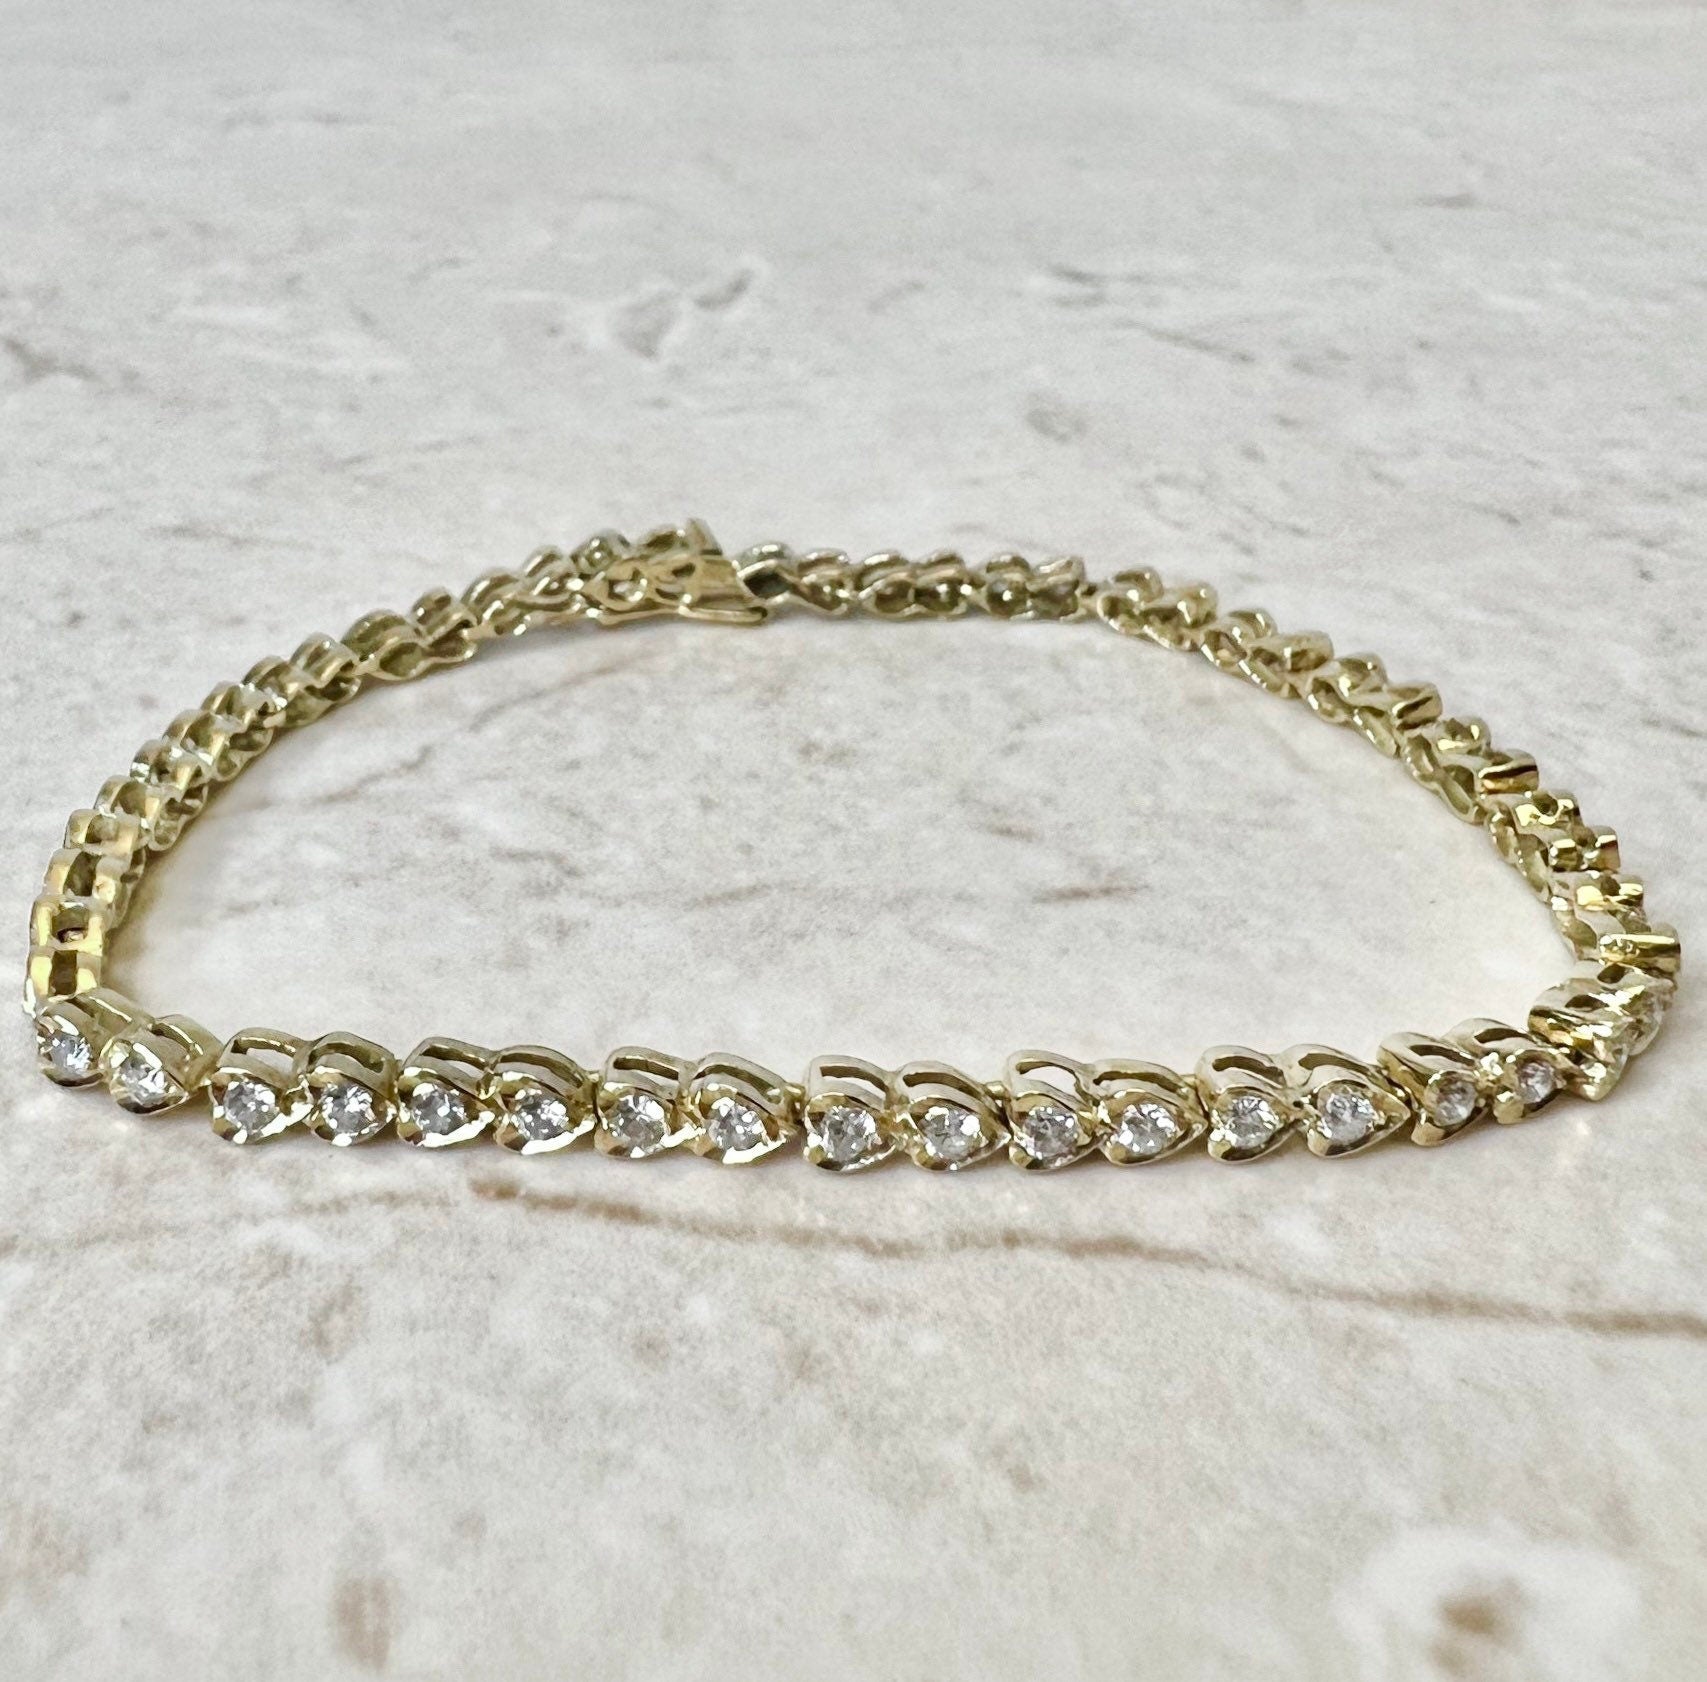 Fine Vintage 18K Heart Diamond Tennis Bracelet 1.20 CTTW - Yellow Gold Tennis Bracelet - Diamond Bracelet - Valentine’s Day Gifts For Her